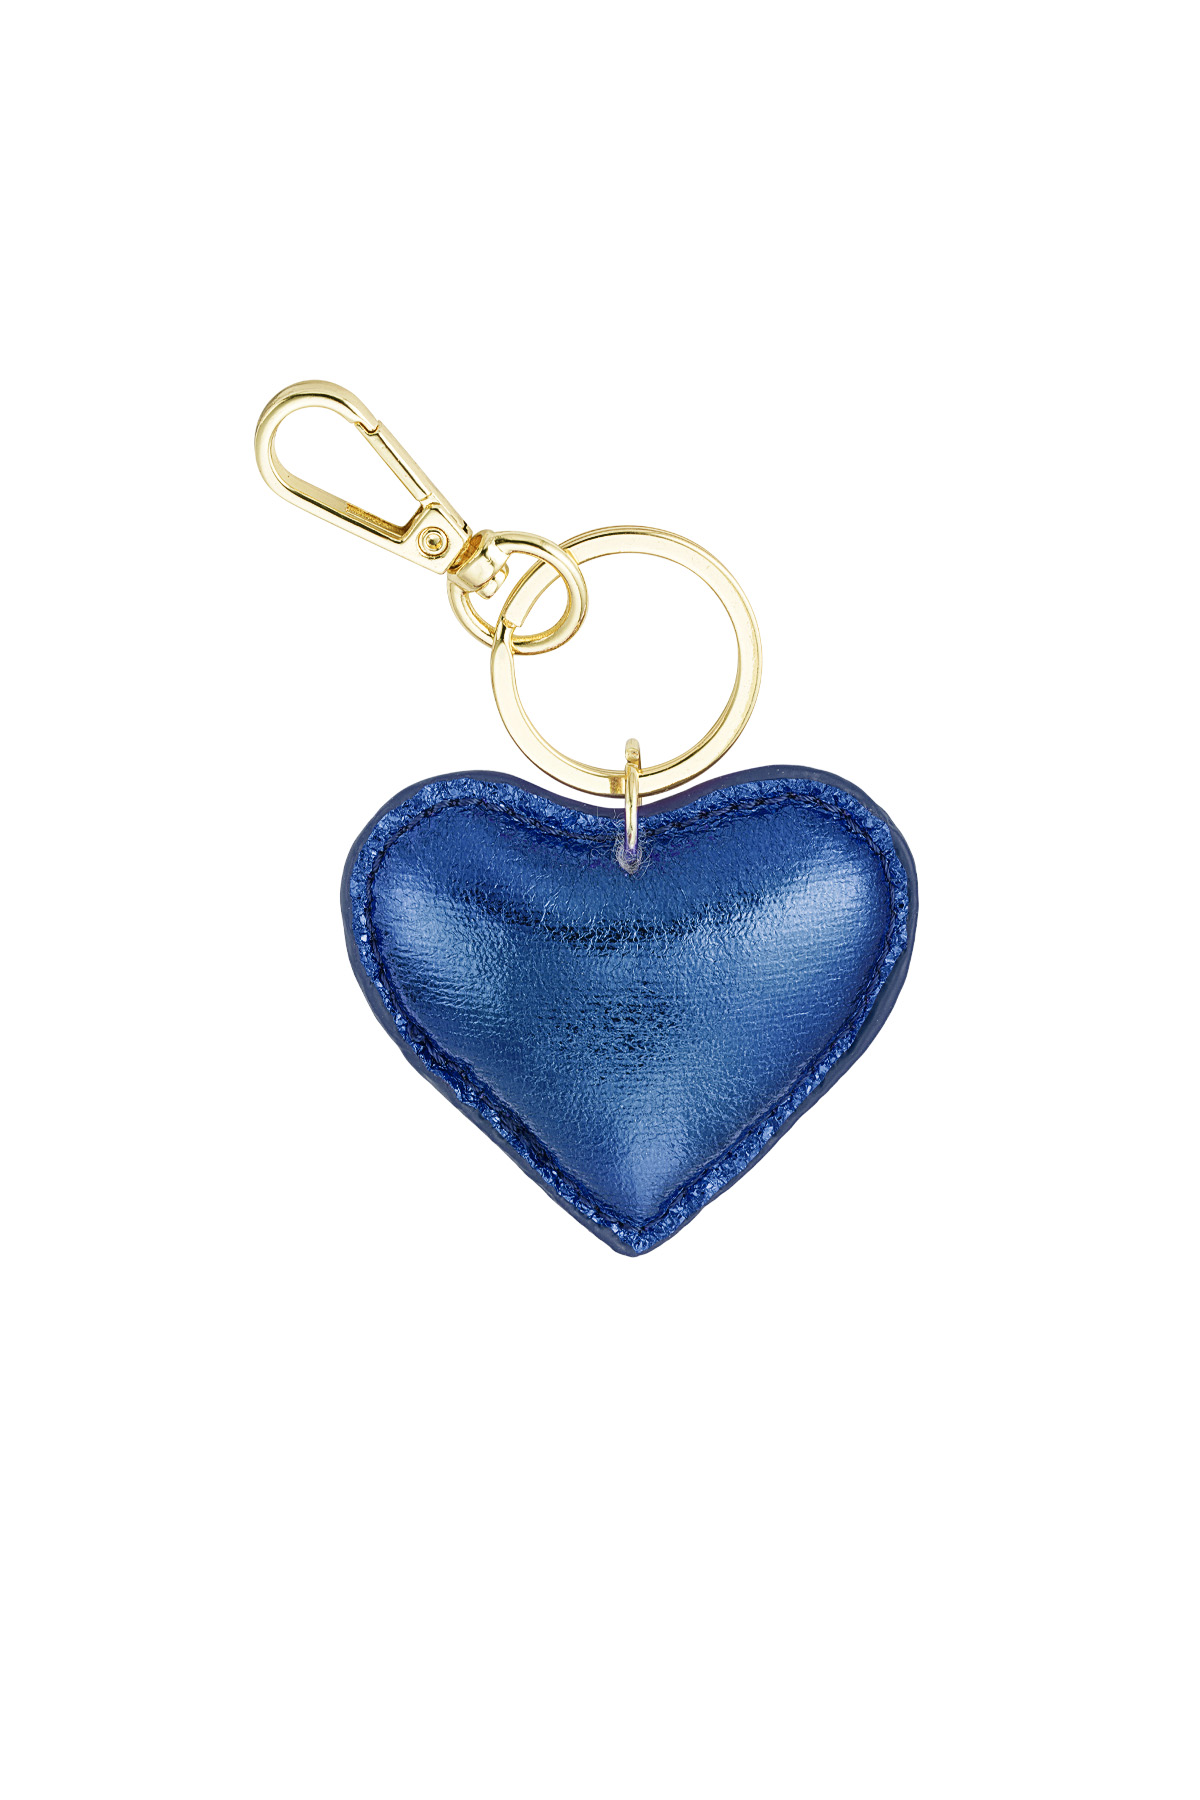 Keychain heart - blue